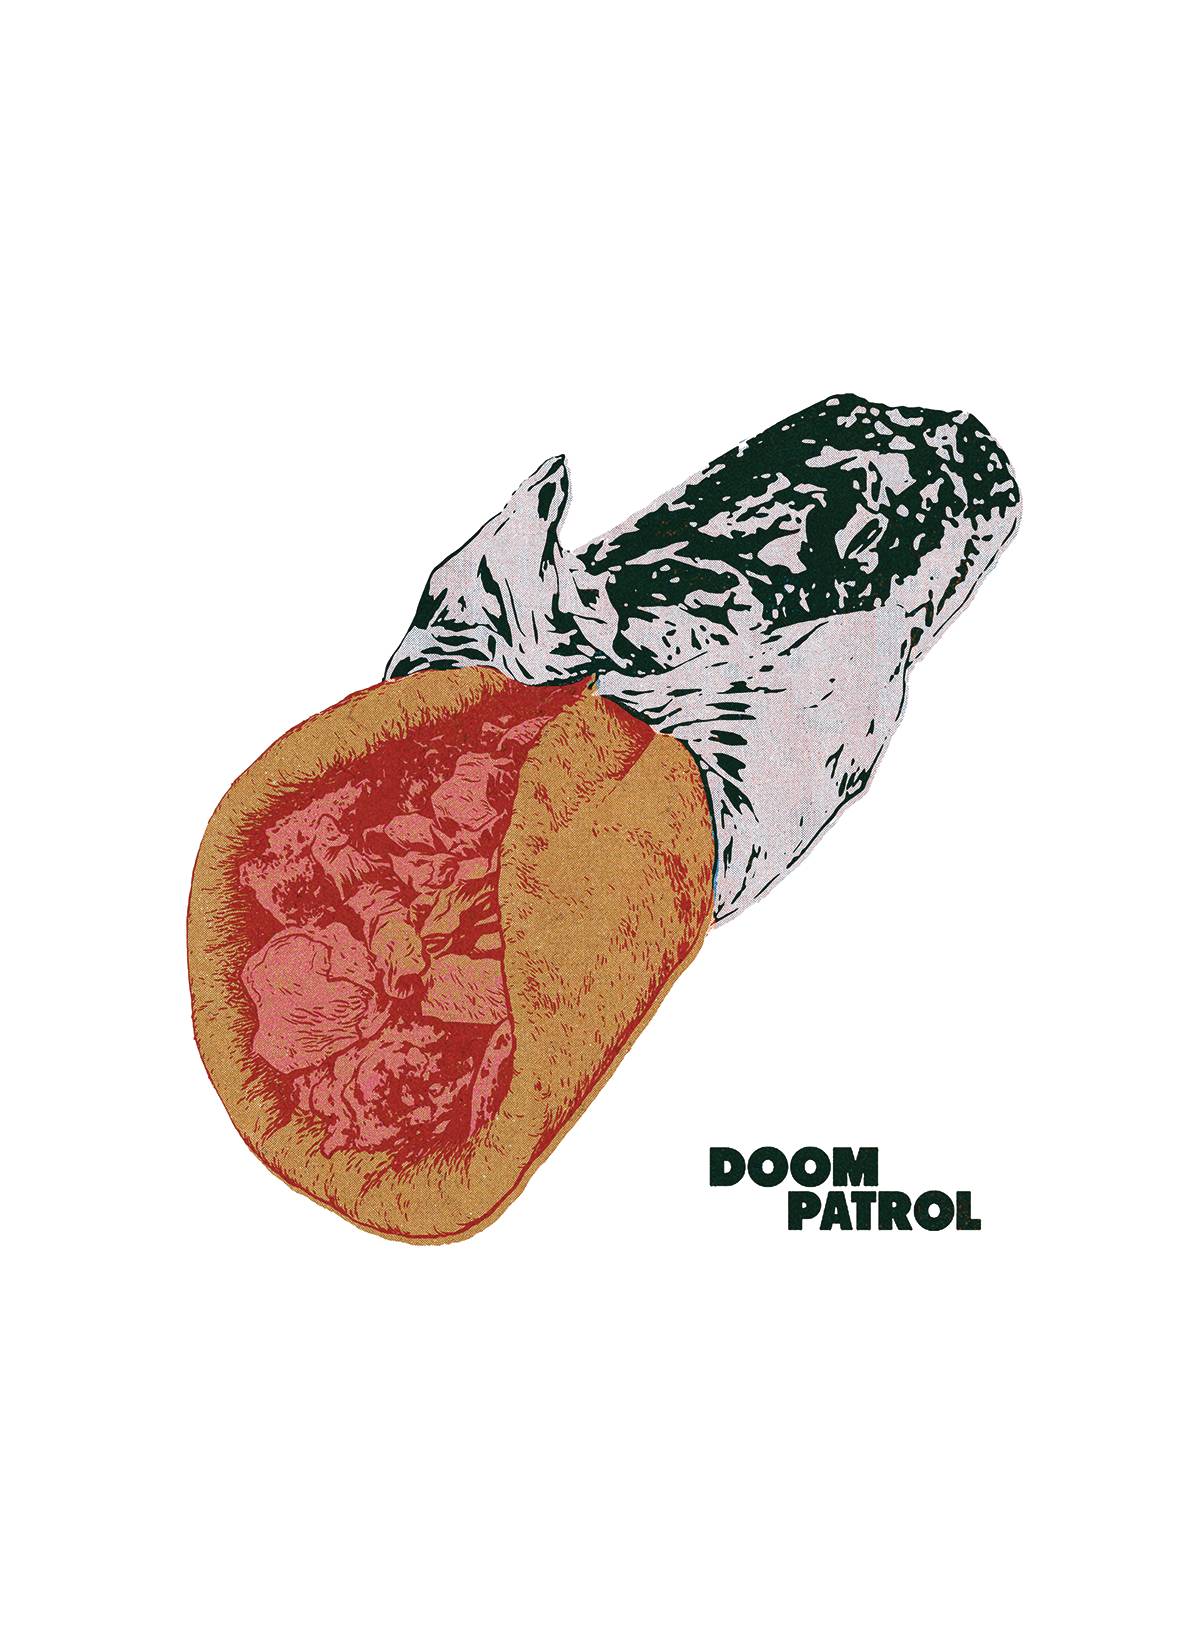 Doom Patrol #1 (2016)